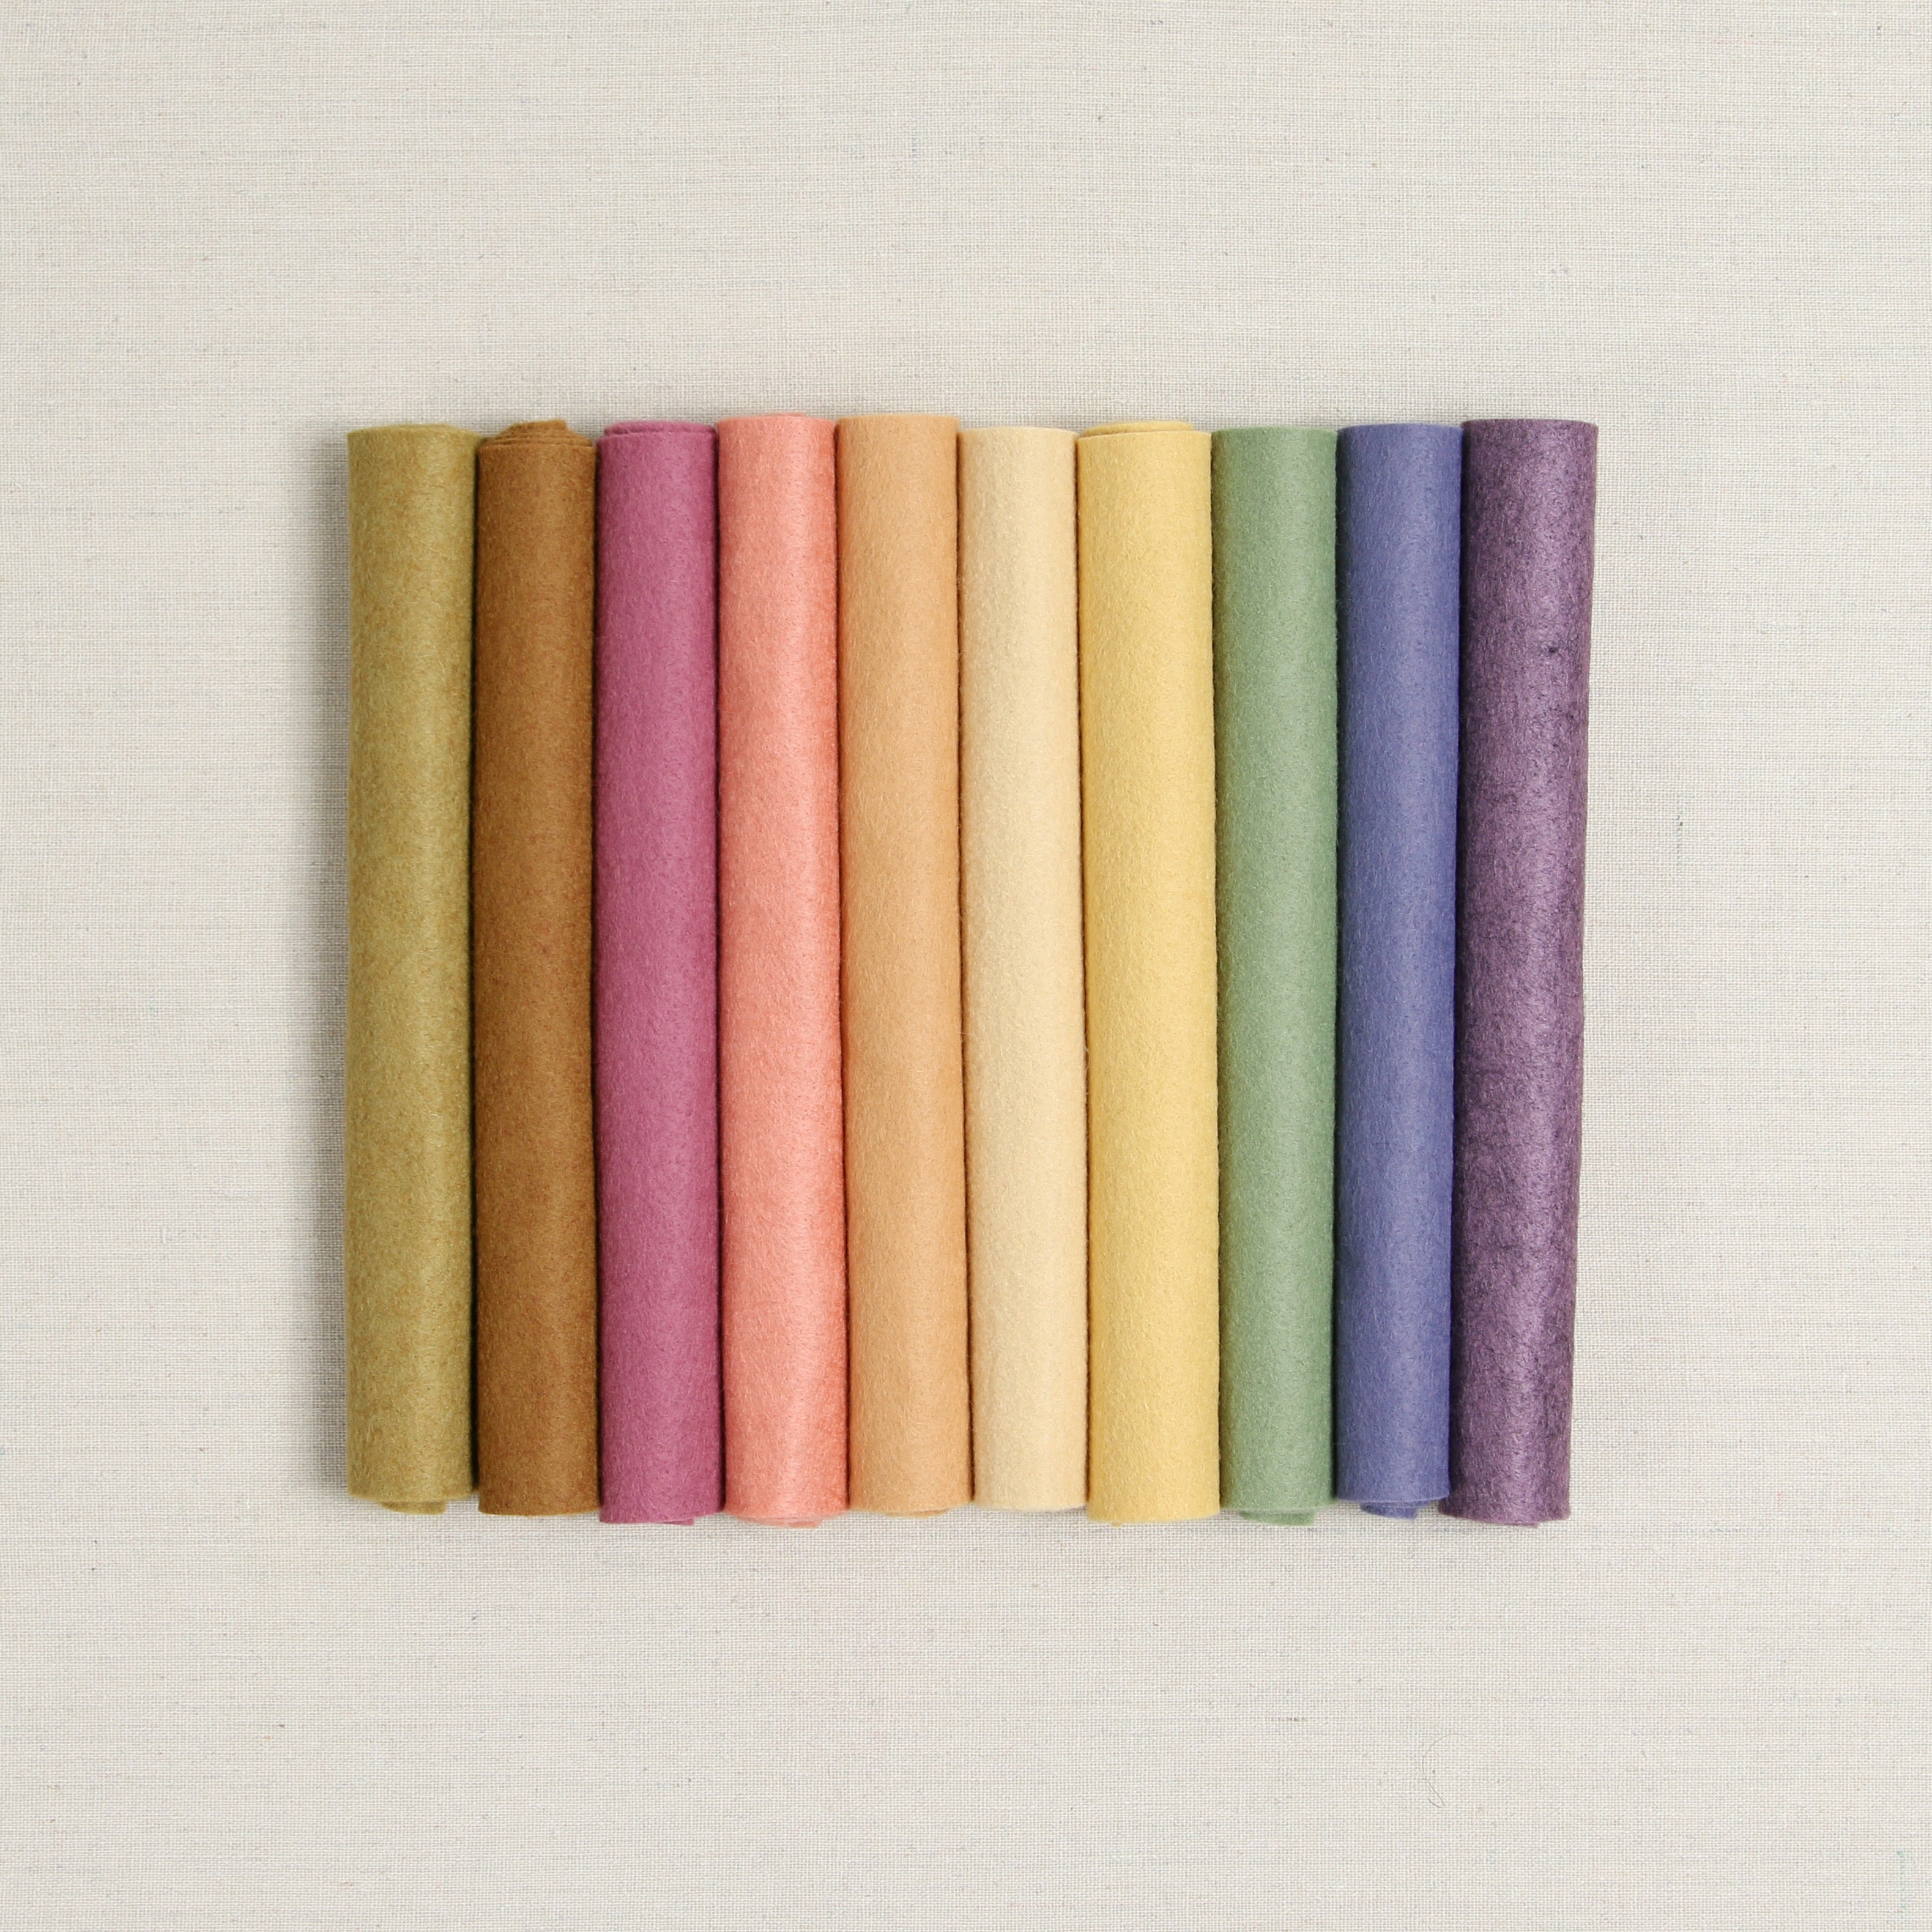 100 Percent Wool Felt Roll - Wool Felt color VIOLET - 5 X 36 Wool Felt -  Purple felt